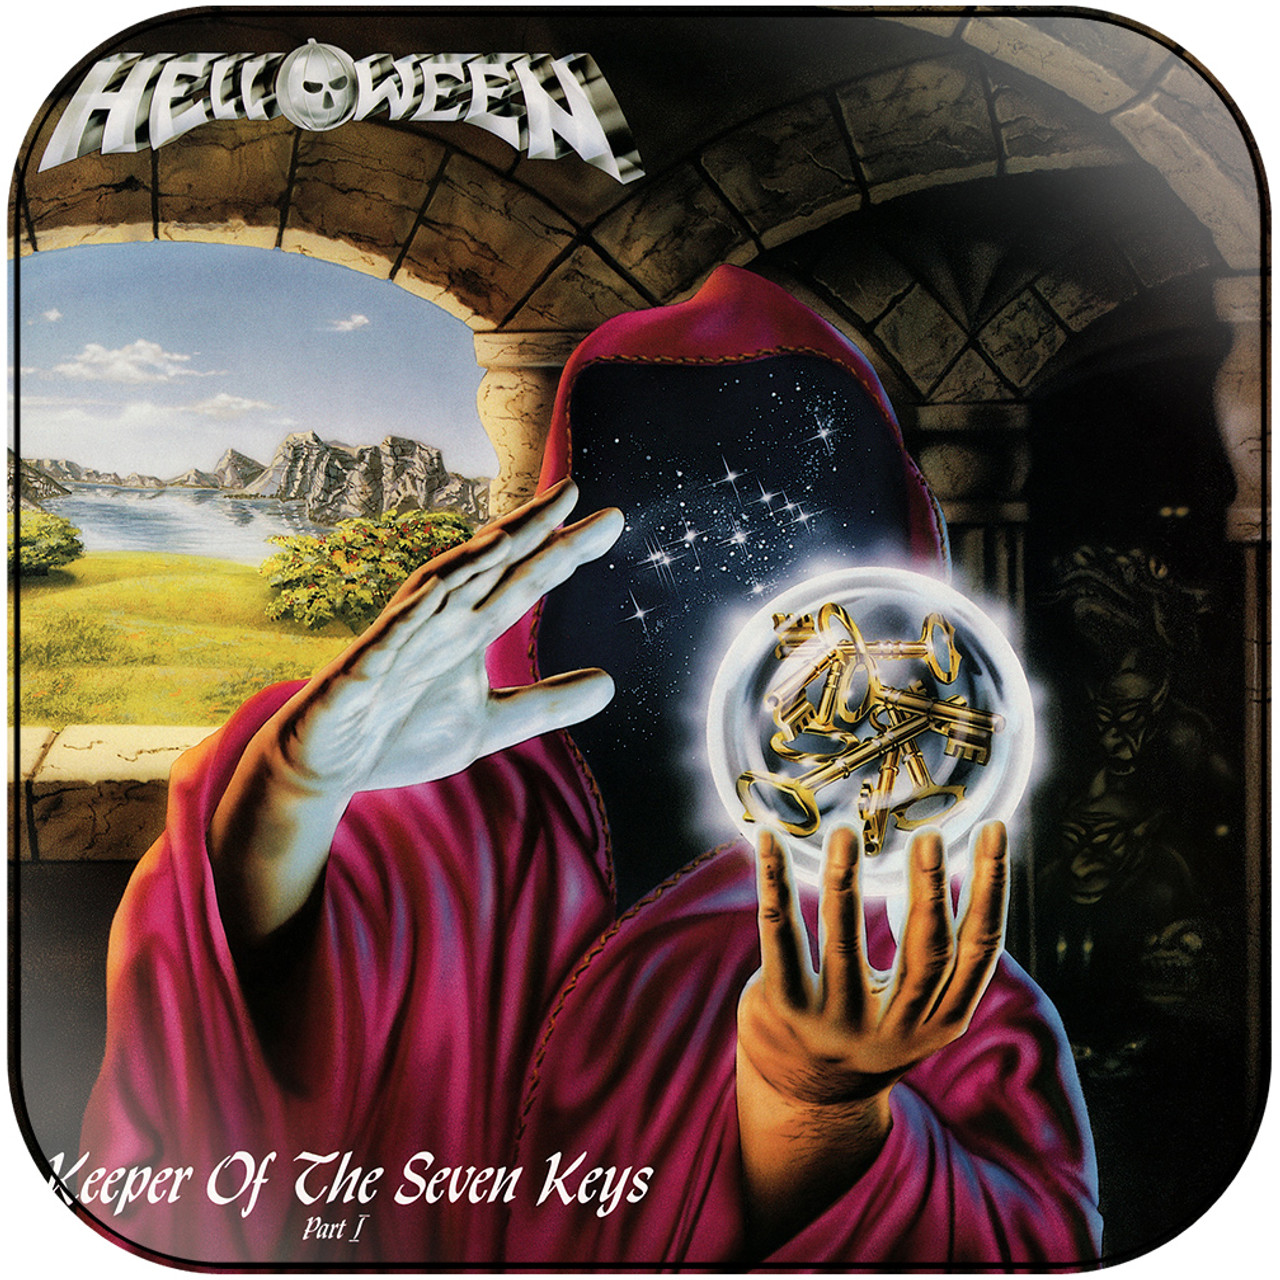 Helloween Keeper Of The Seven Keys Part I Album Cover Sticker